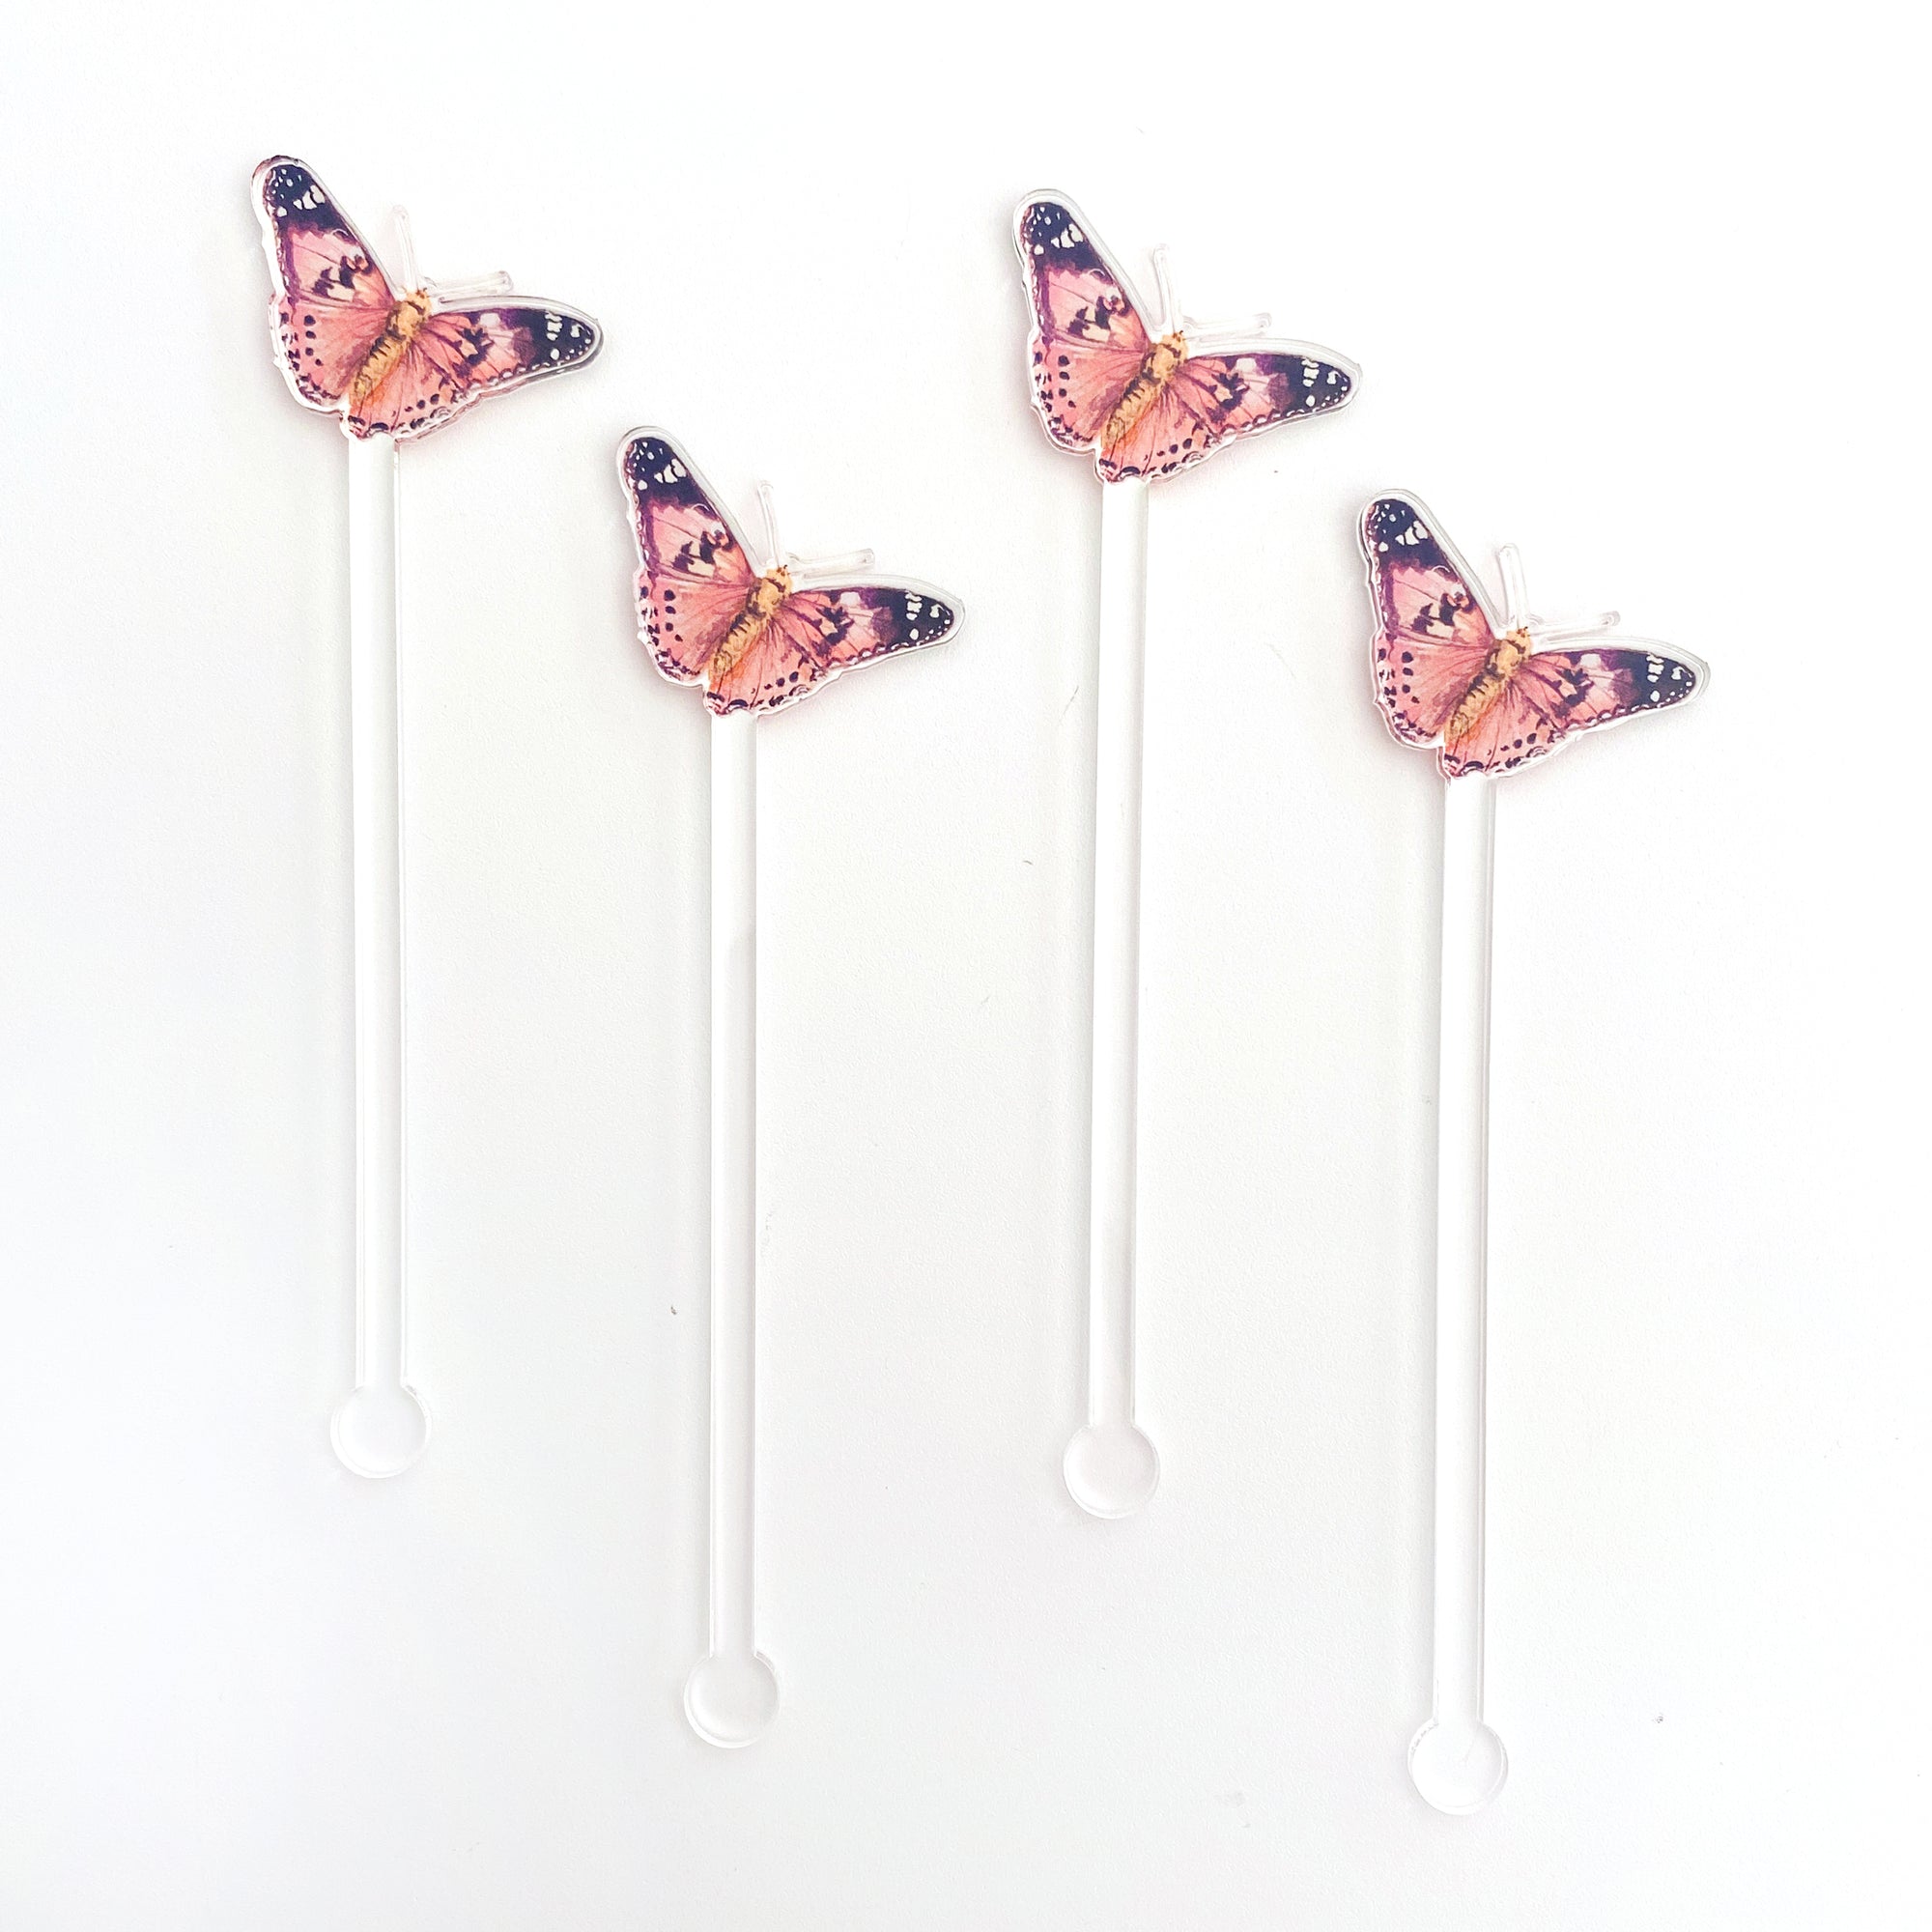 Painted Lady Butterfly Acrylic Stir Sticks